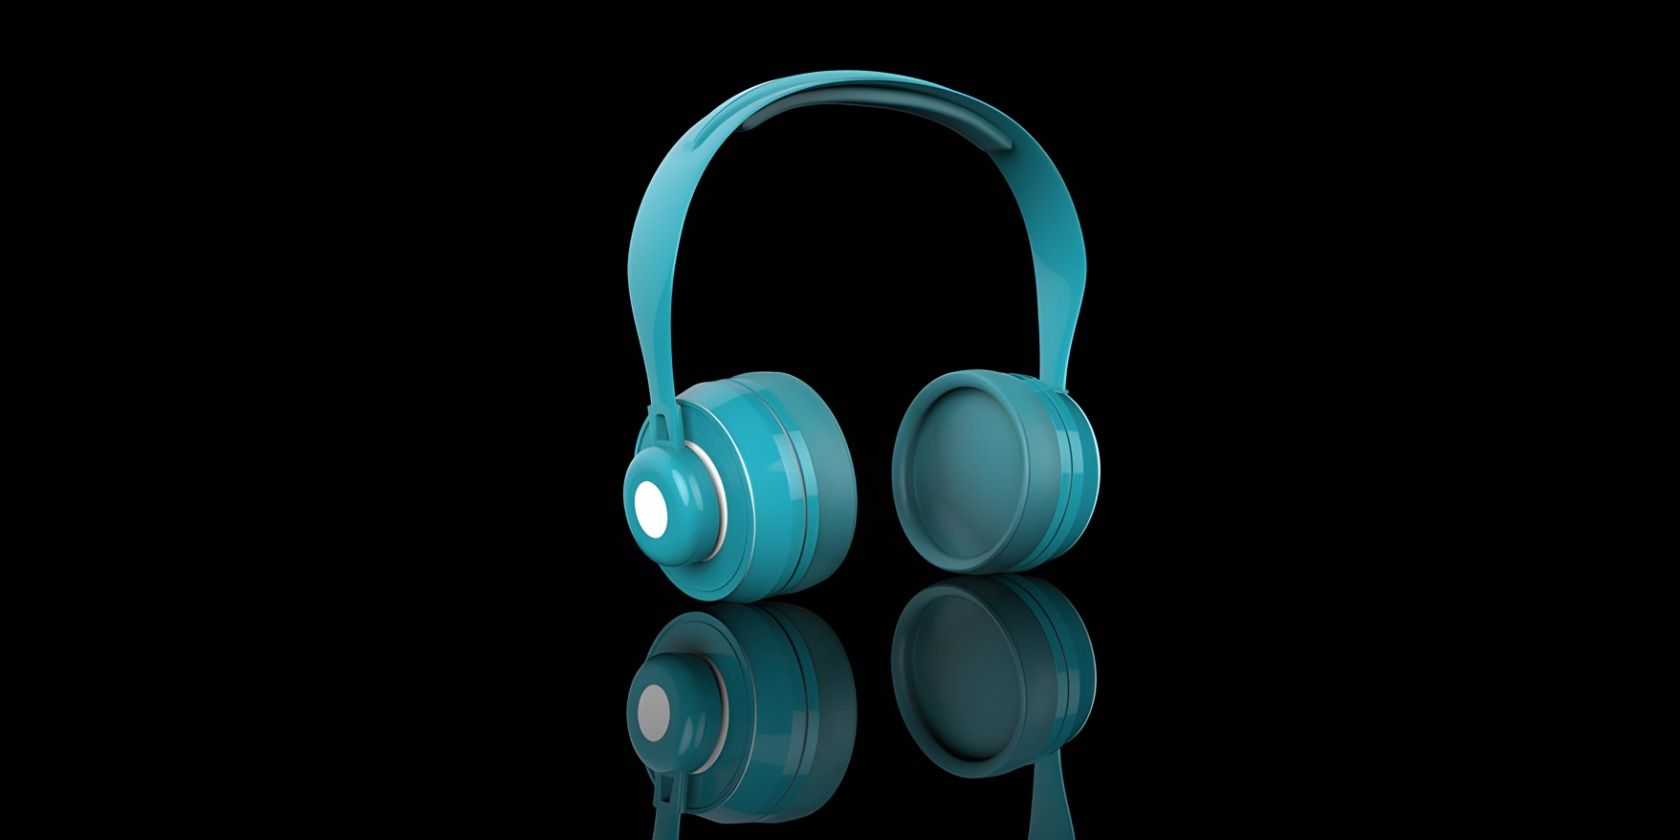 Teal colored headphones against black background.